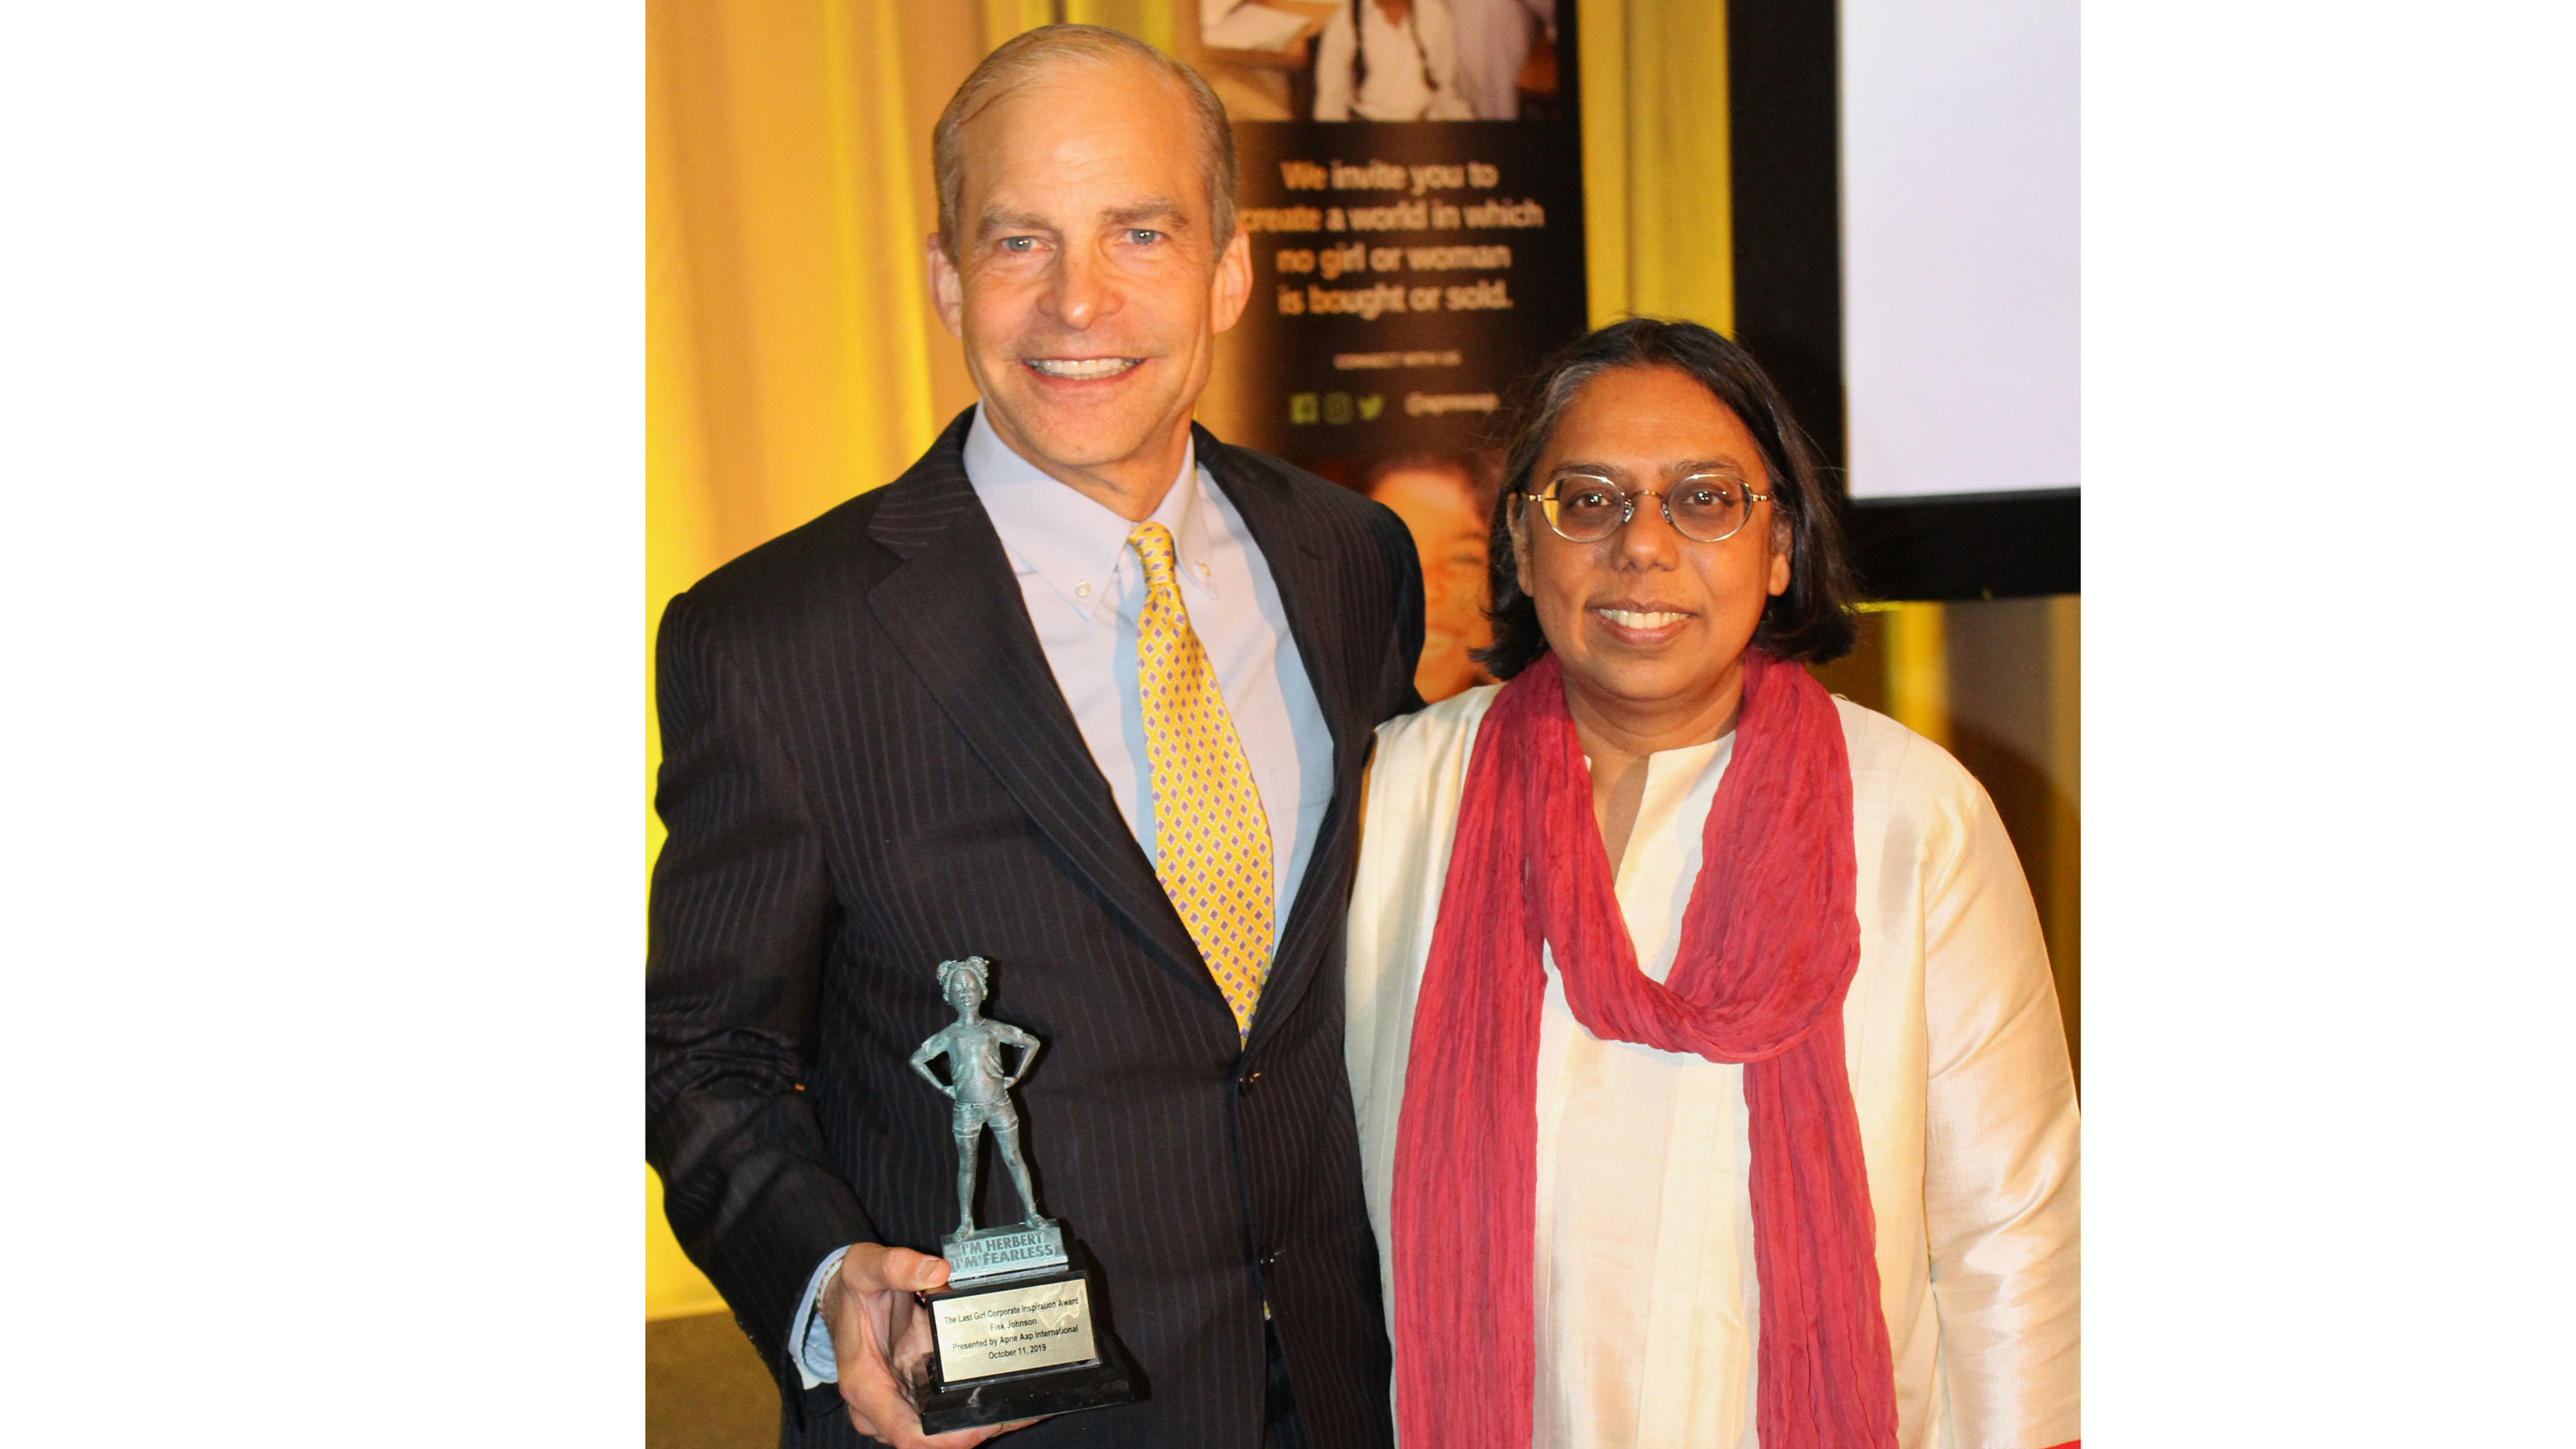 Fisk Johnson receiving “The Last Girl Corporate Inspiration Award” from the anti-sex trafficking group, Apne Aap Women Worldwide (Apne Aap). 